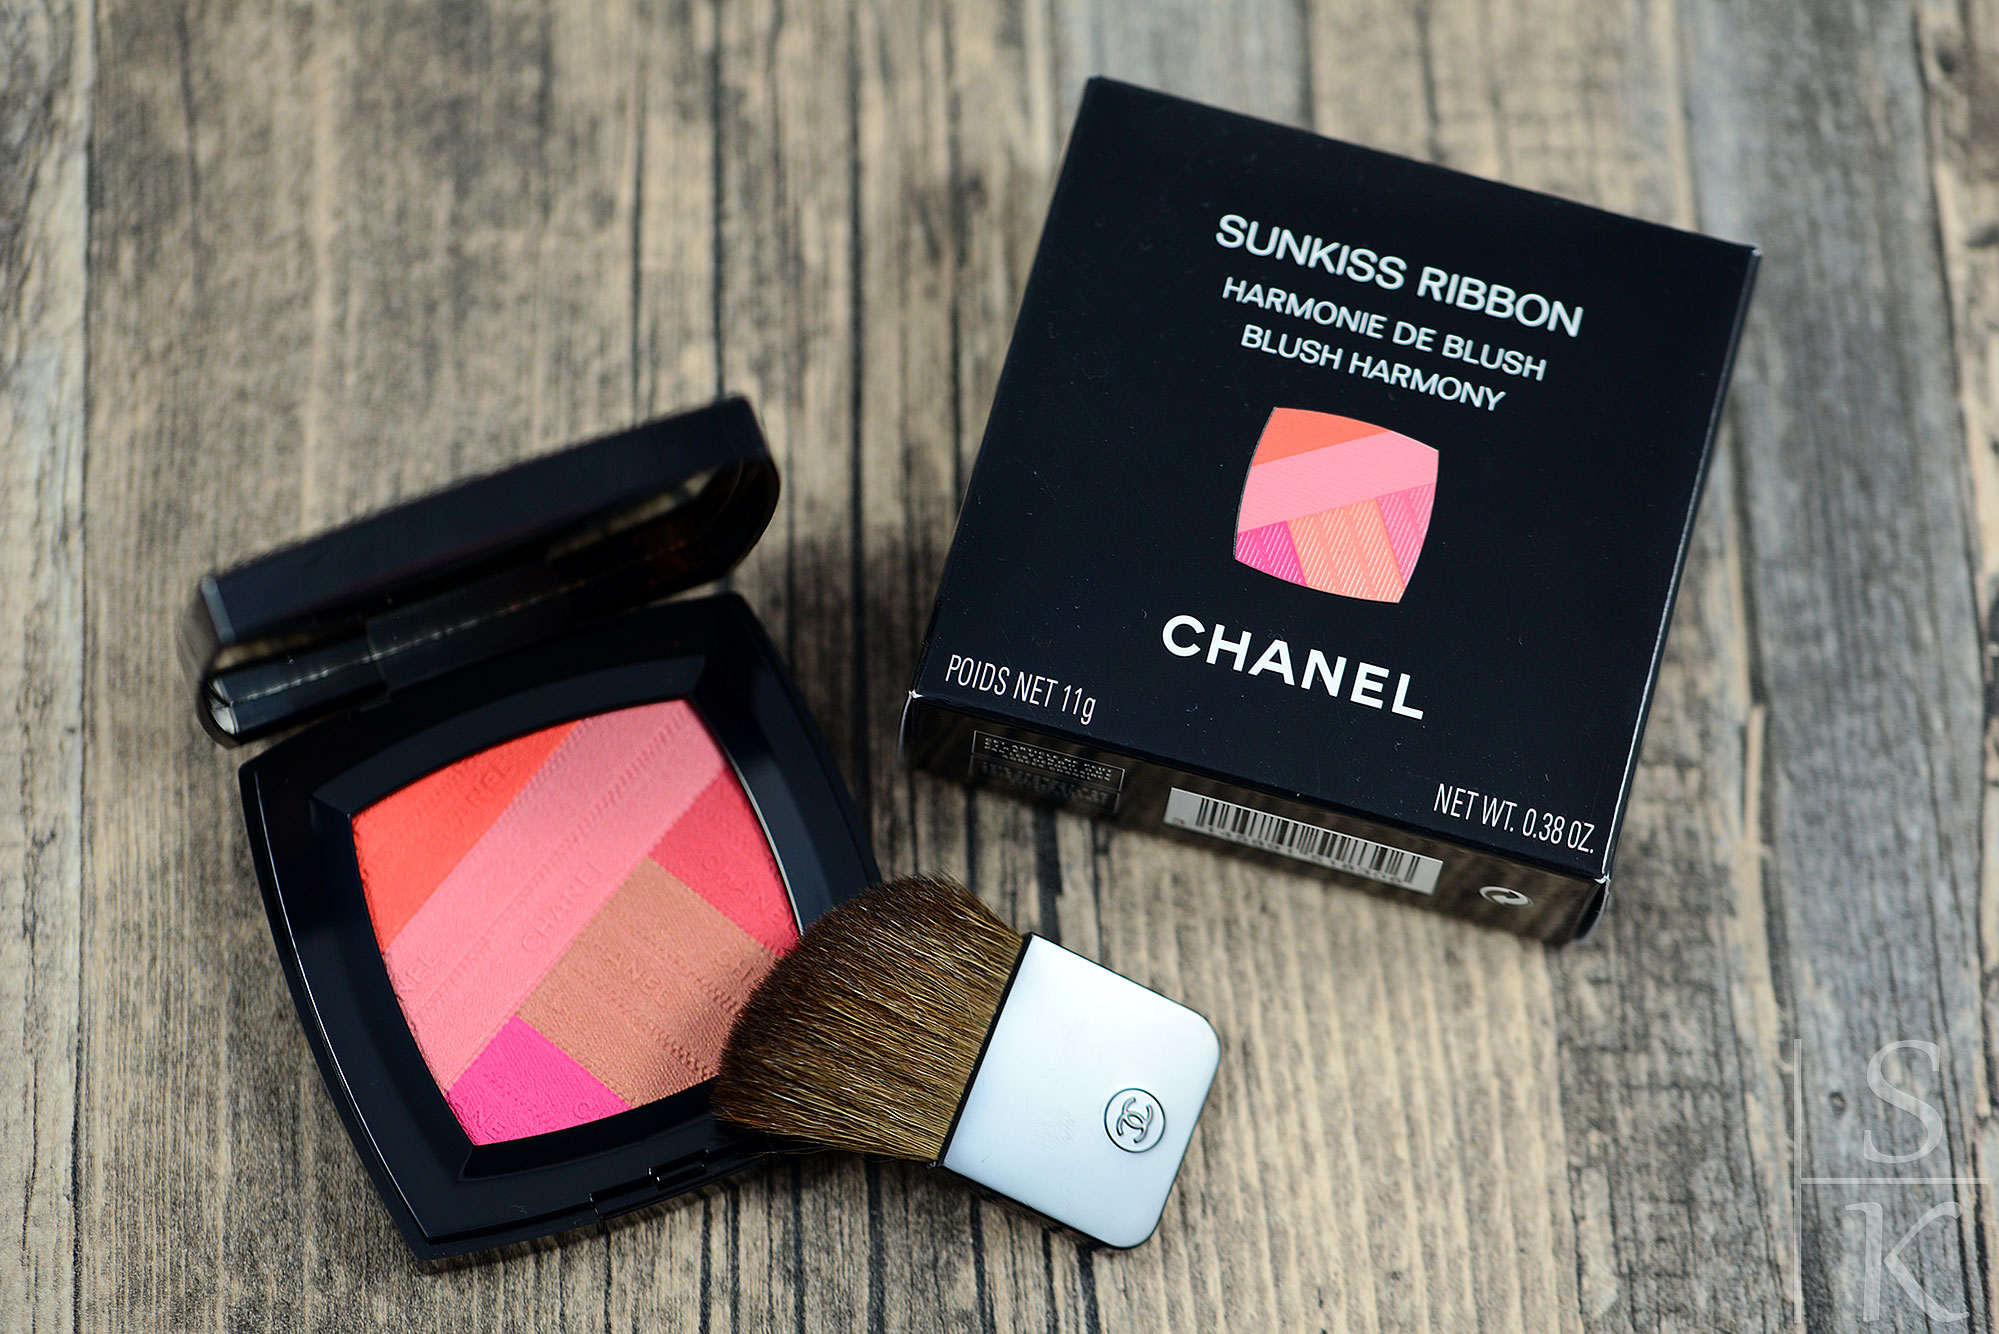 Chanel - LA Sunrise Sunkiss Ribbon Blush Harmony